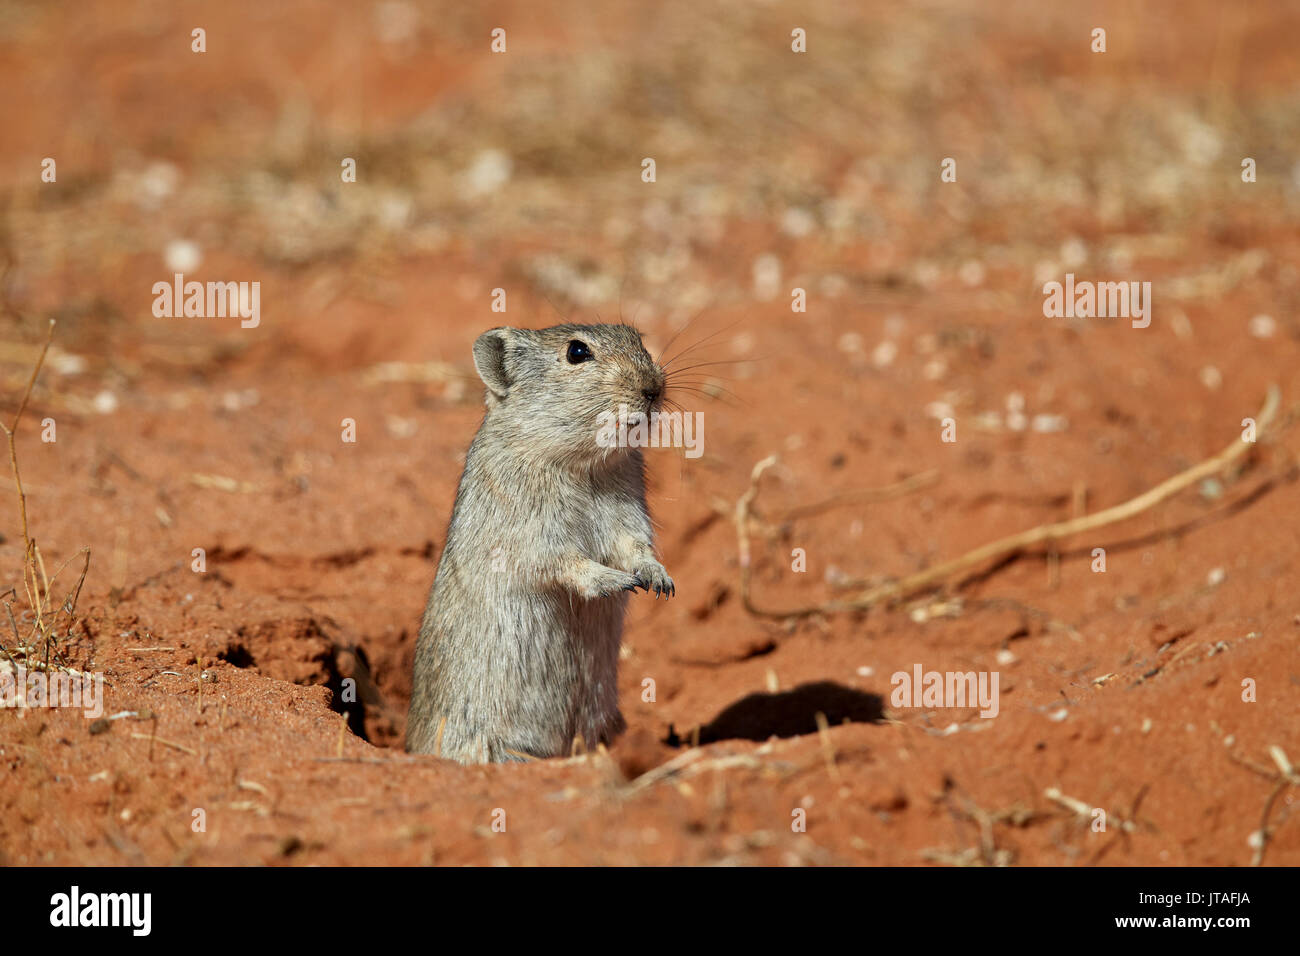 Brant's whistling rat (Parotomys brantsii), Kgalagadi Transfrontier Park, South Africa, Africa Stock Photo